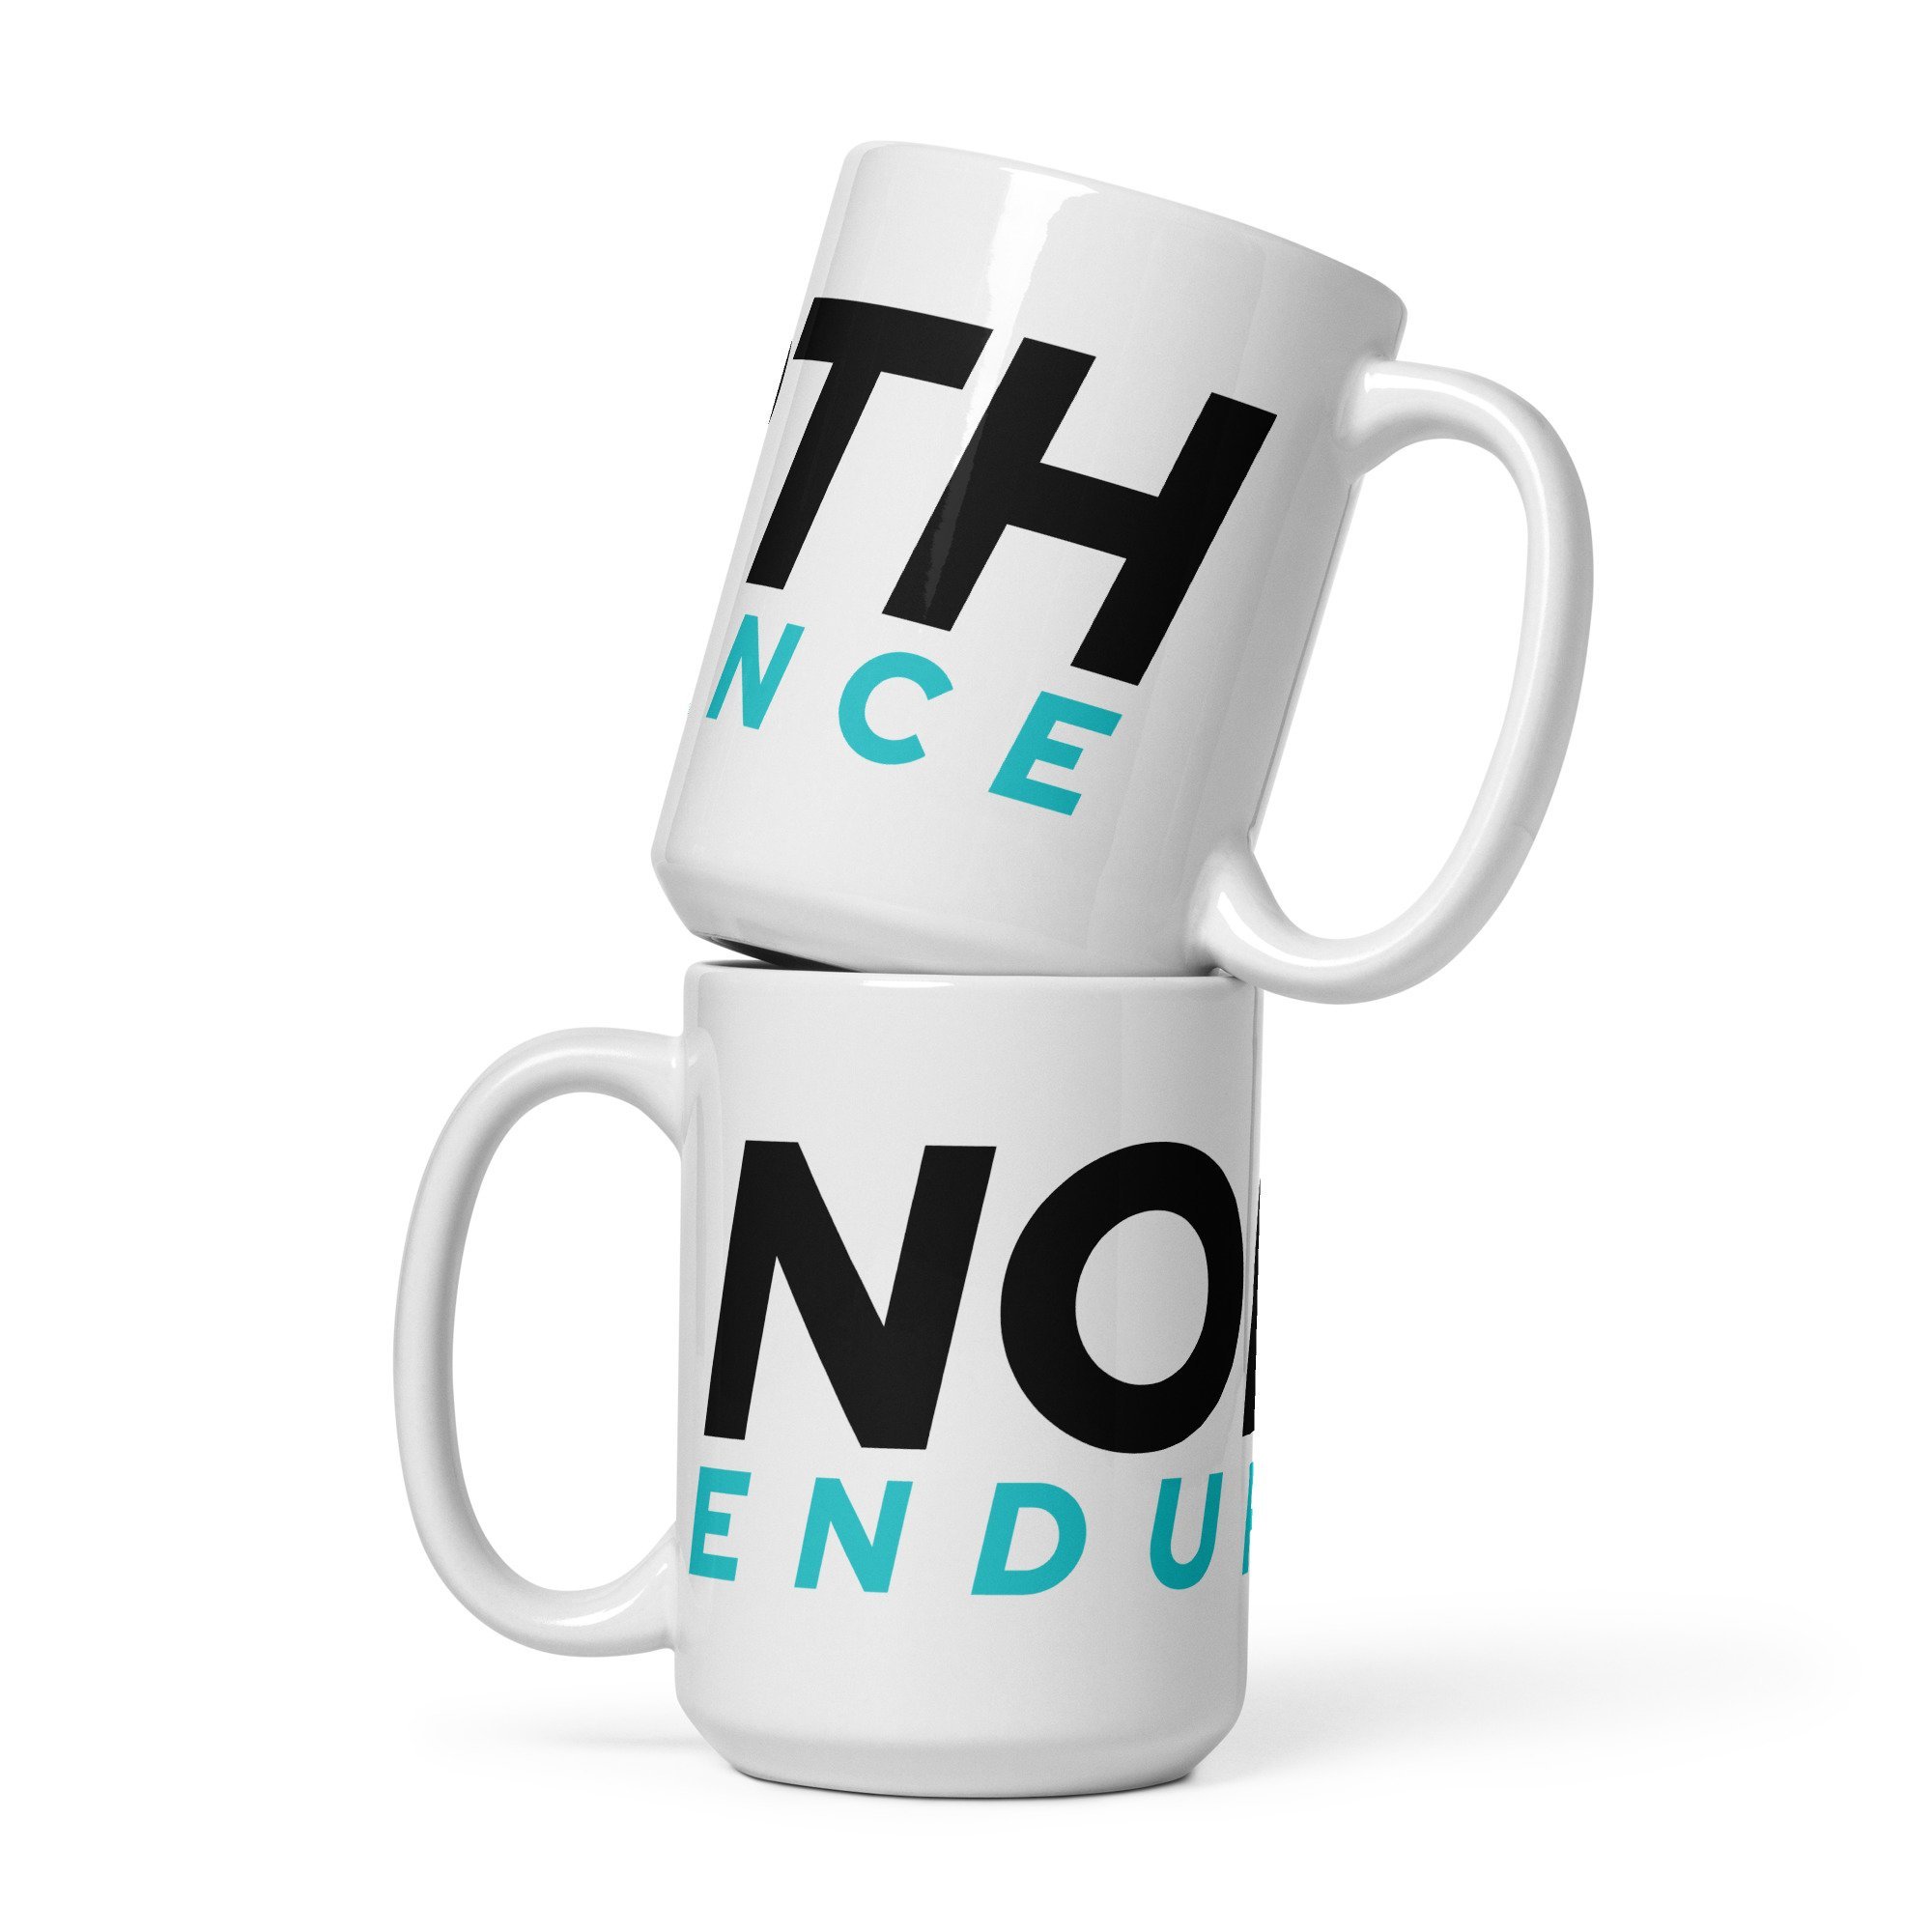 North Endurance - Mugs.jpg